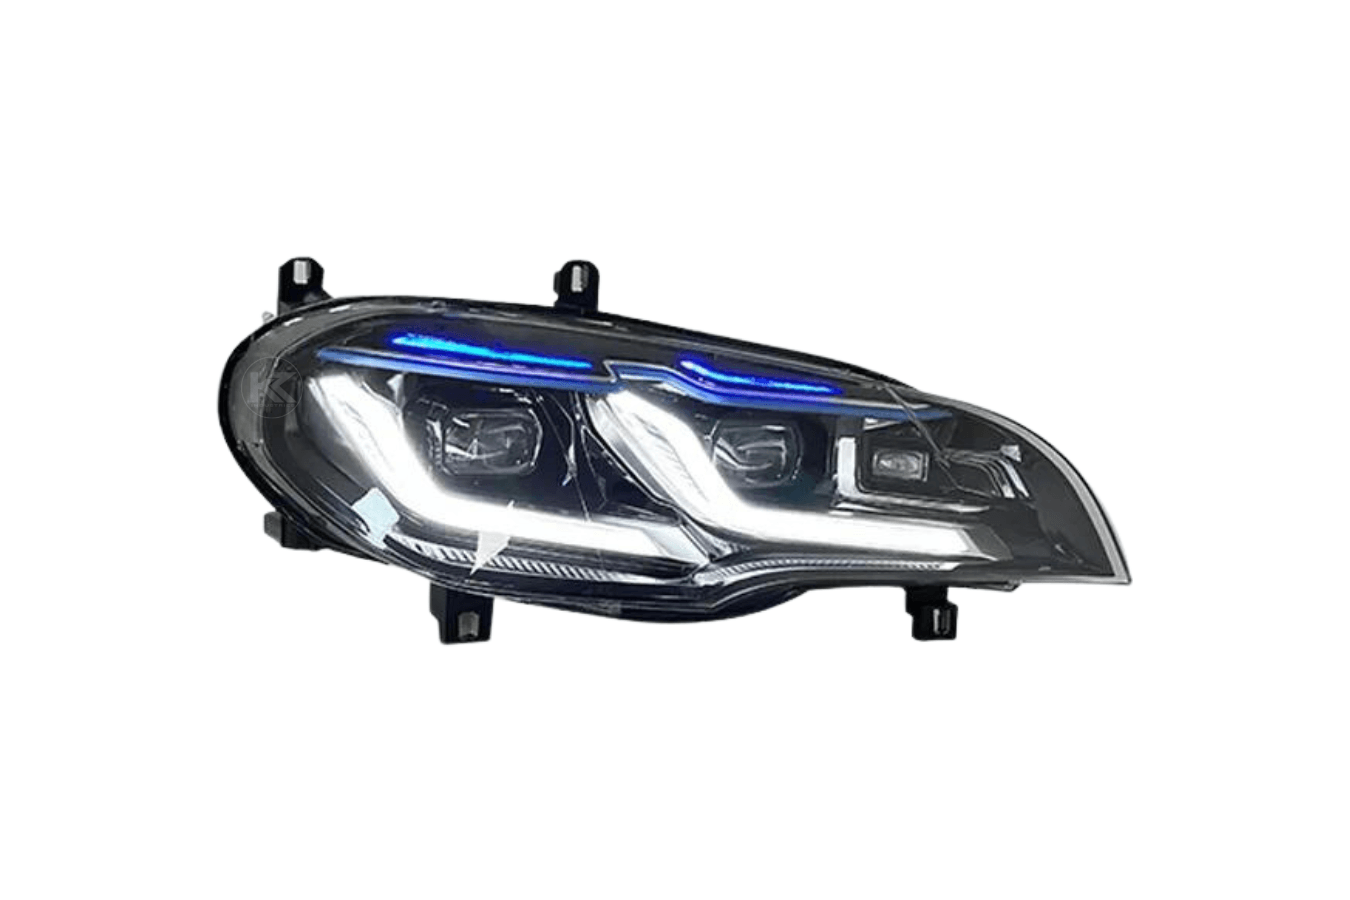 BMW X5 E70 LED Headlight Upgrade (2007-2013) - K2 Industries